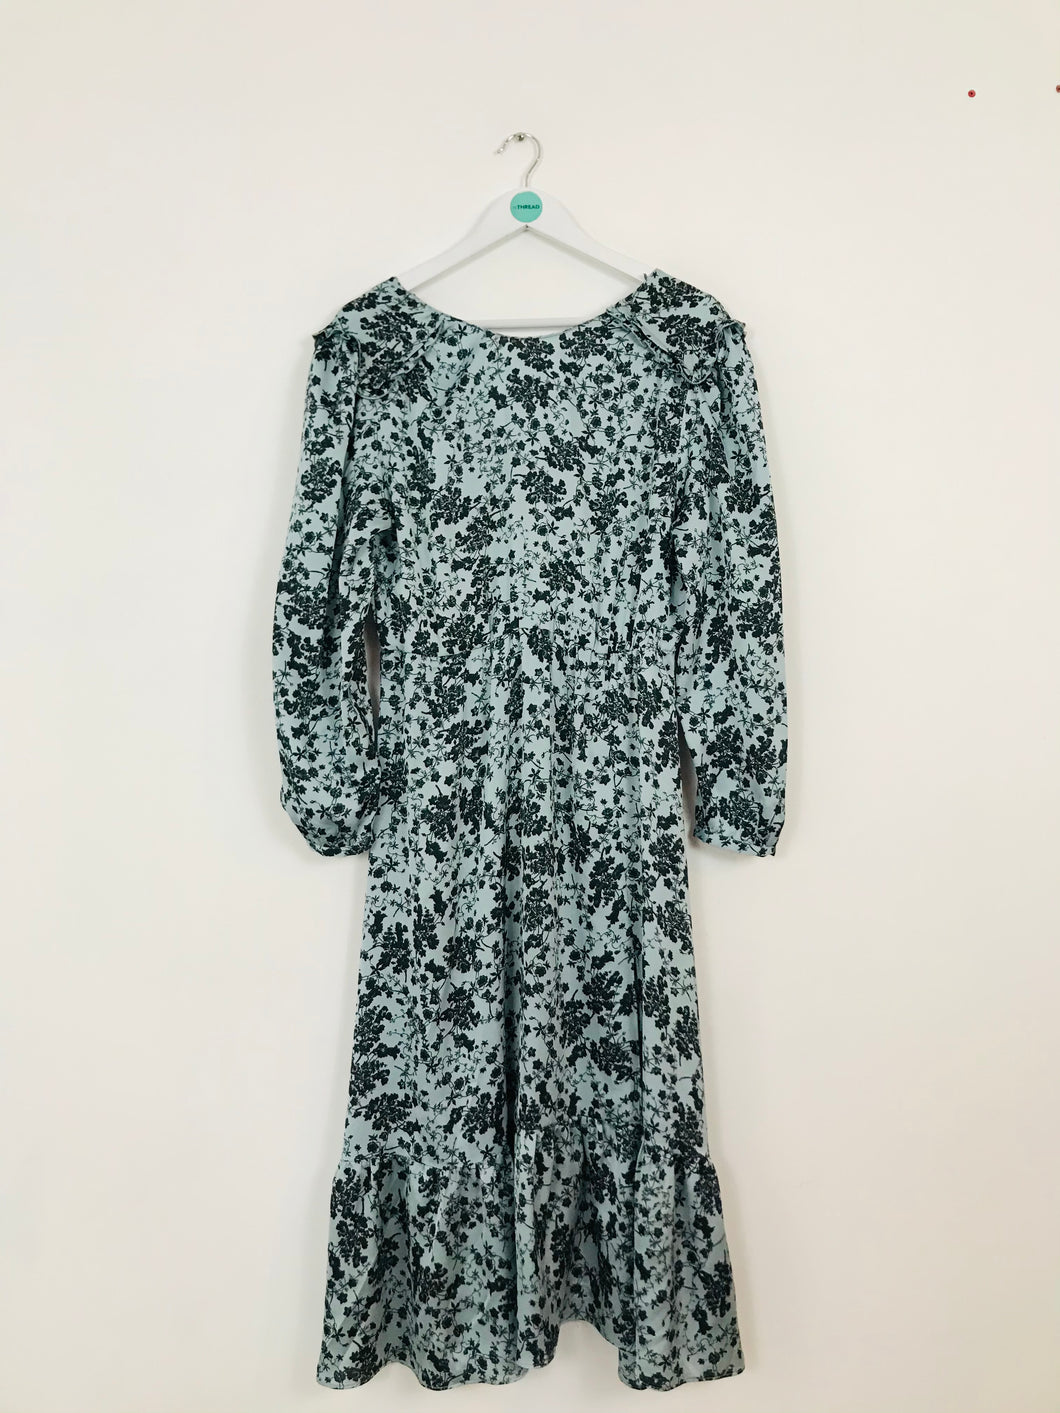 Zara Women’s Floral Ruffle Midi Smock Dress | L | Blue Black